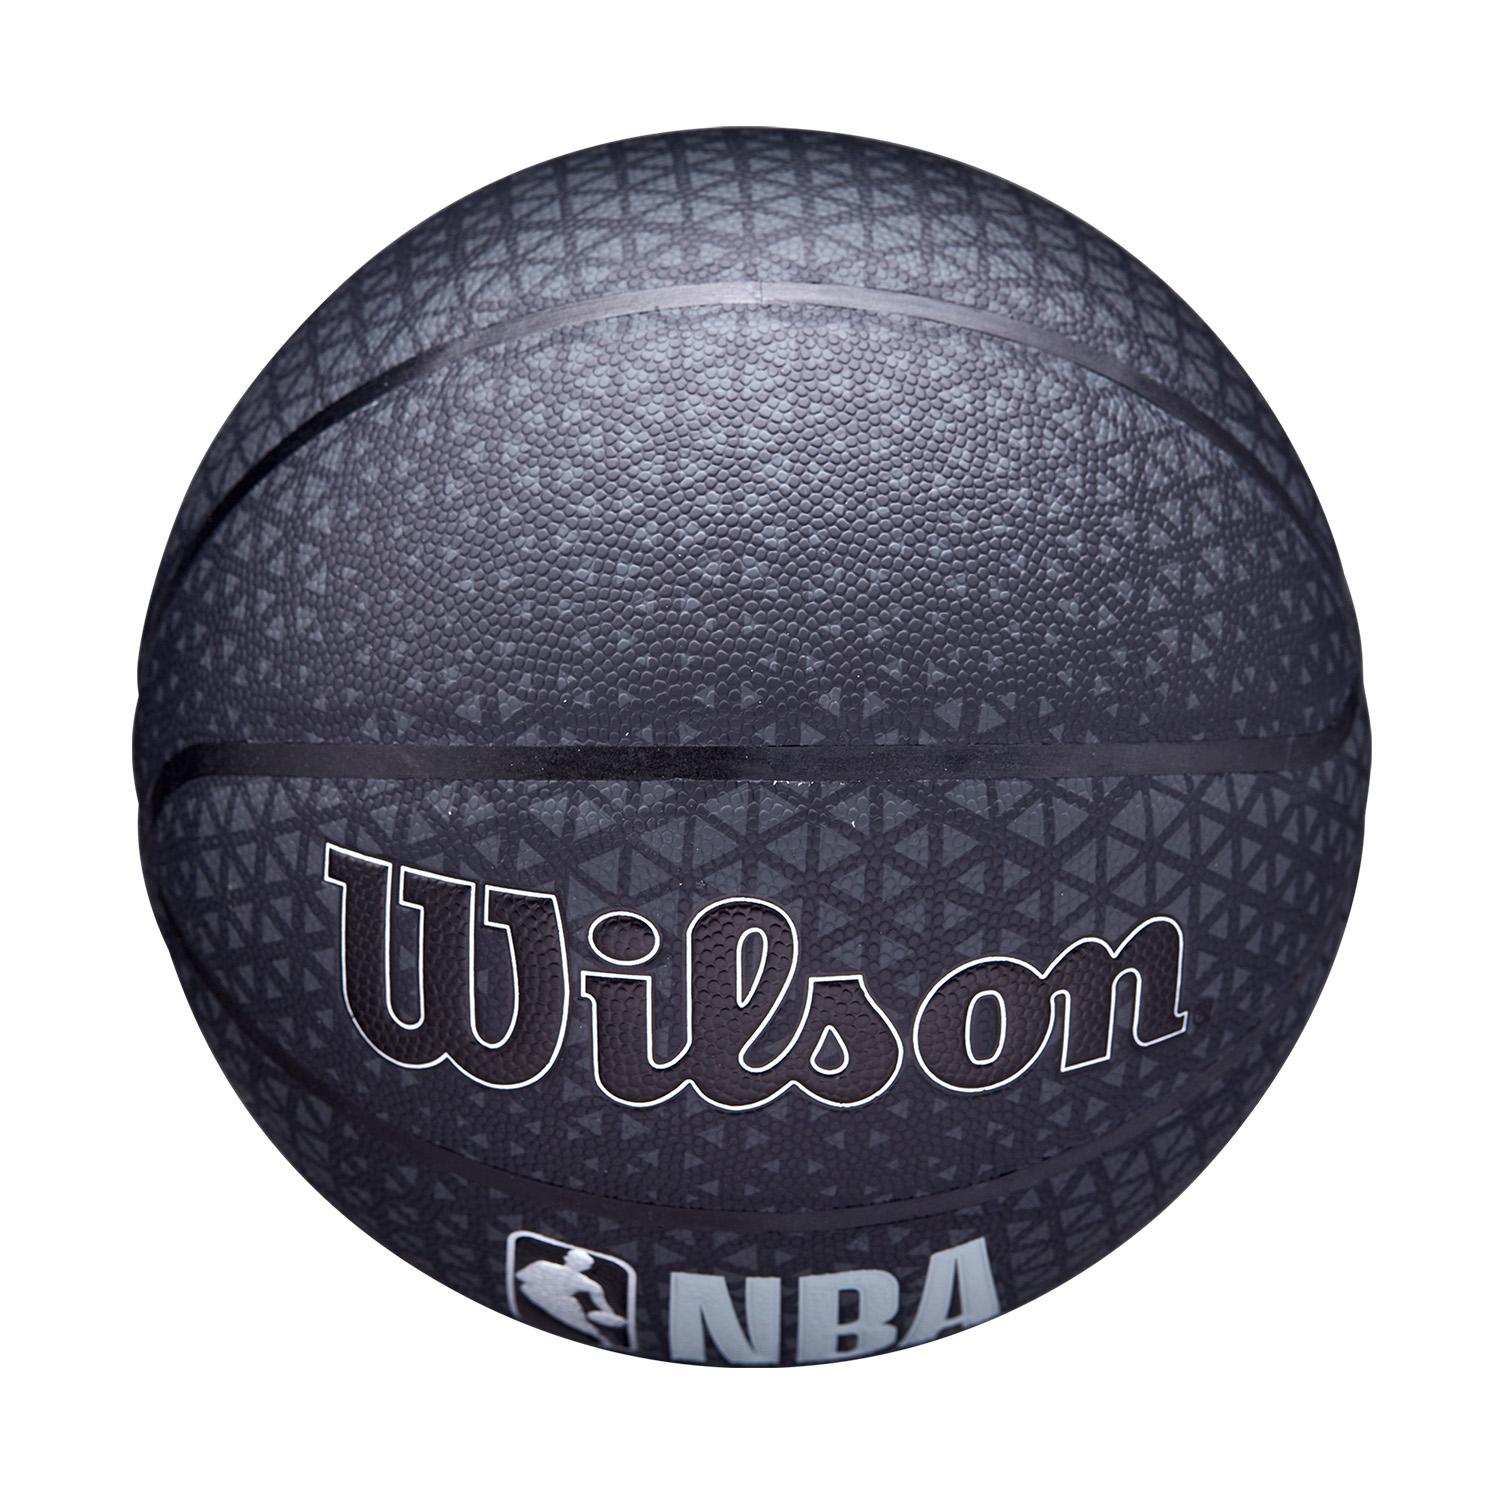 Balón NBA Forge Pro Printed